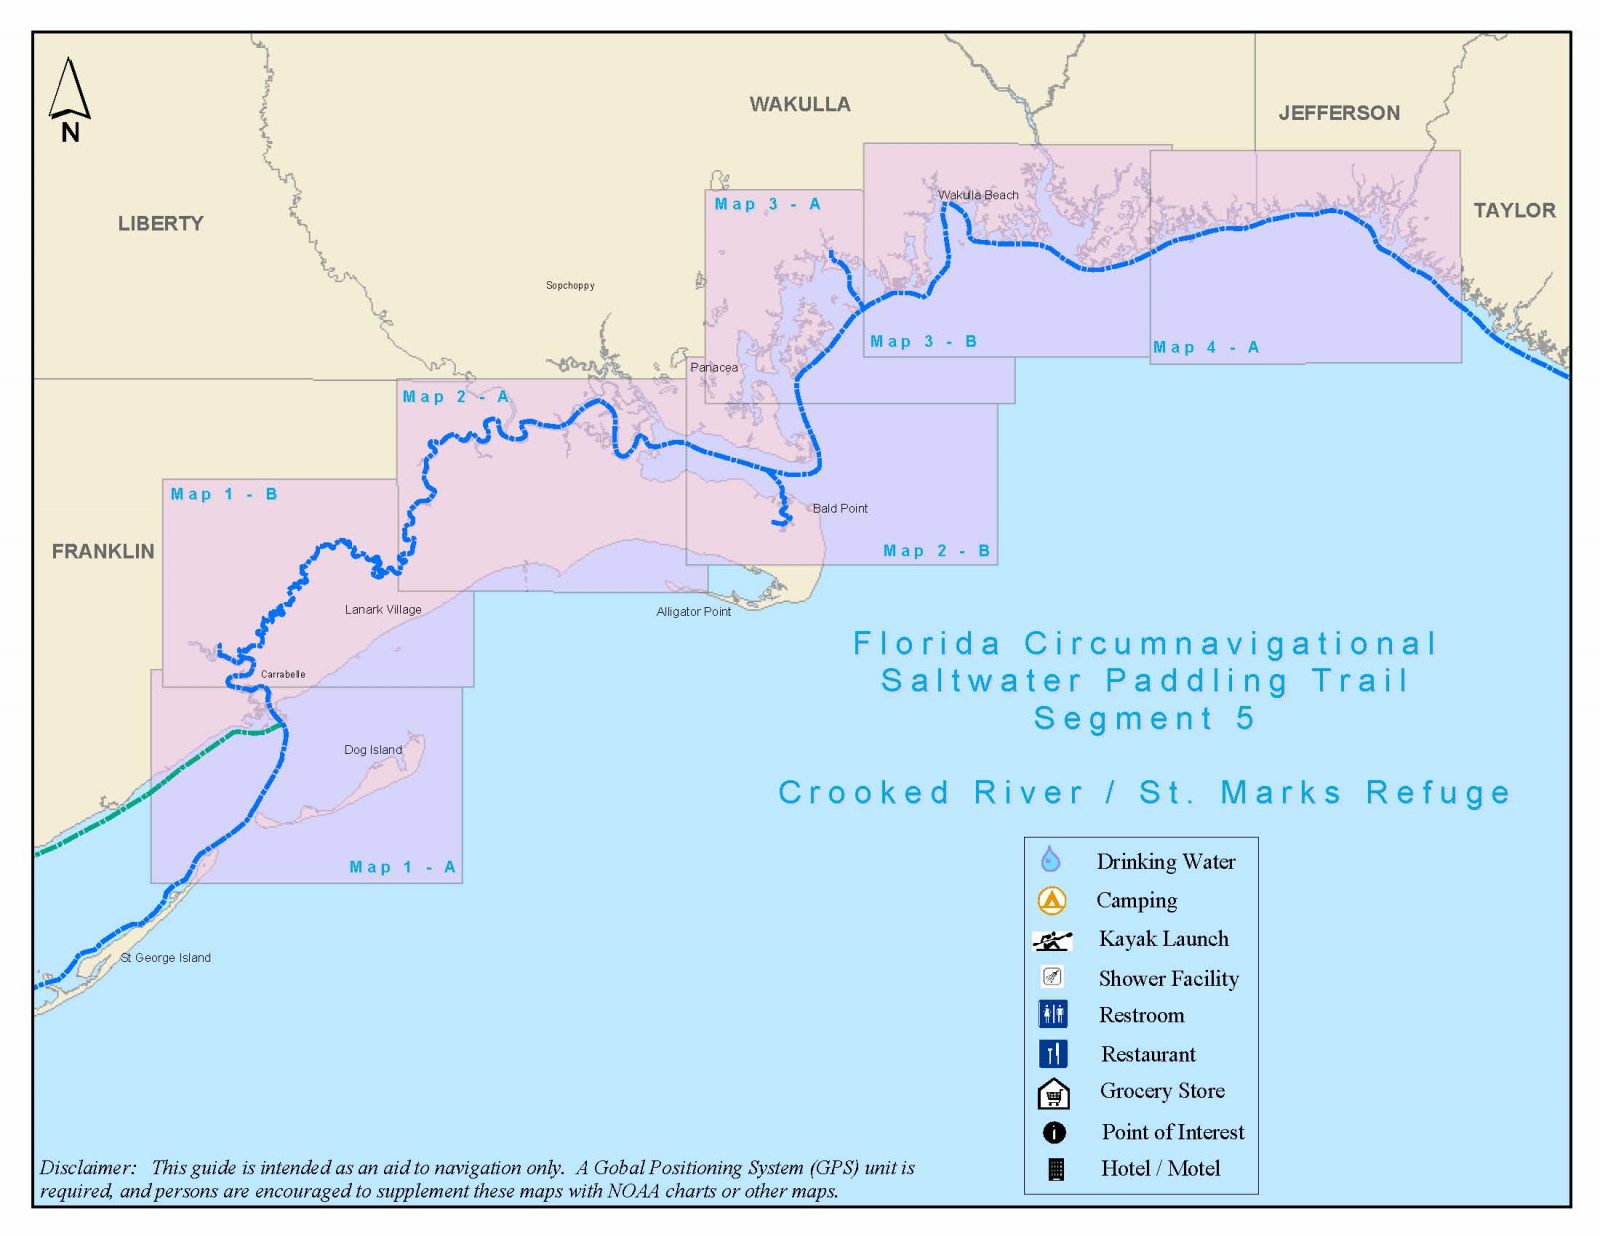 Florida Circumnavigational Saltwater Paddling Trail - Segment 5